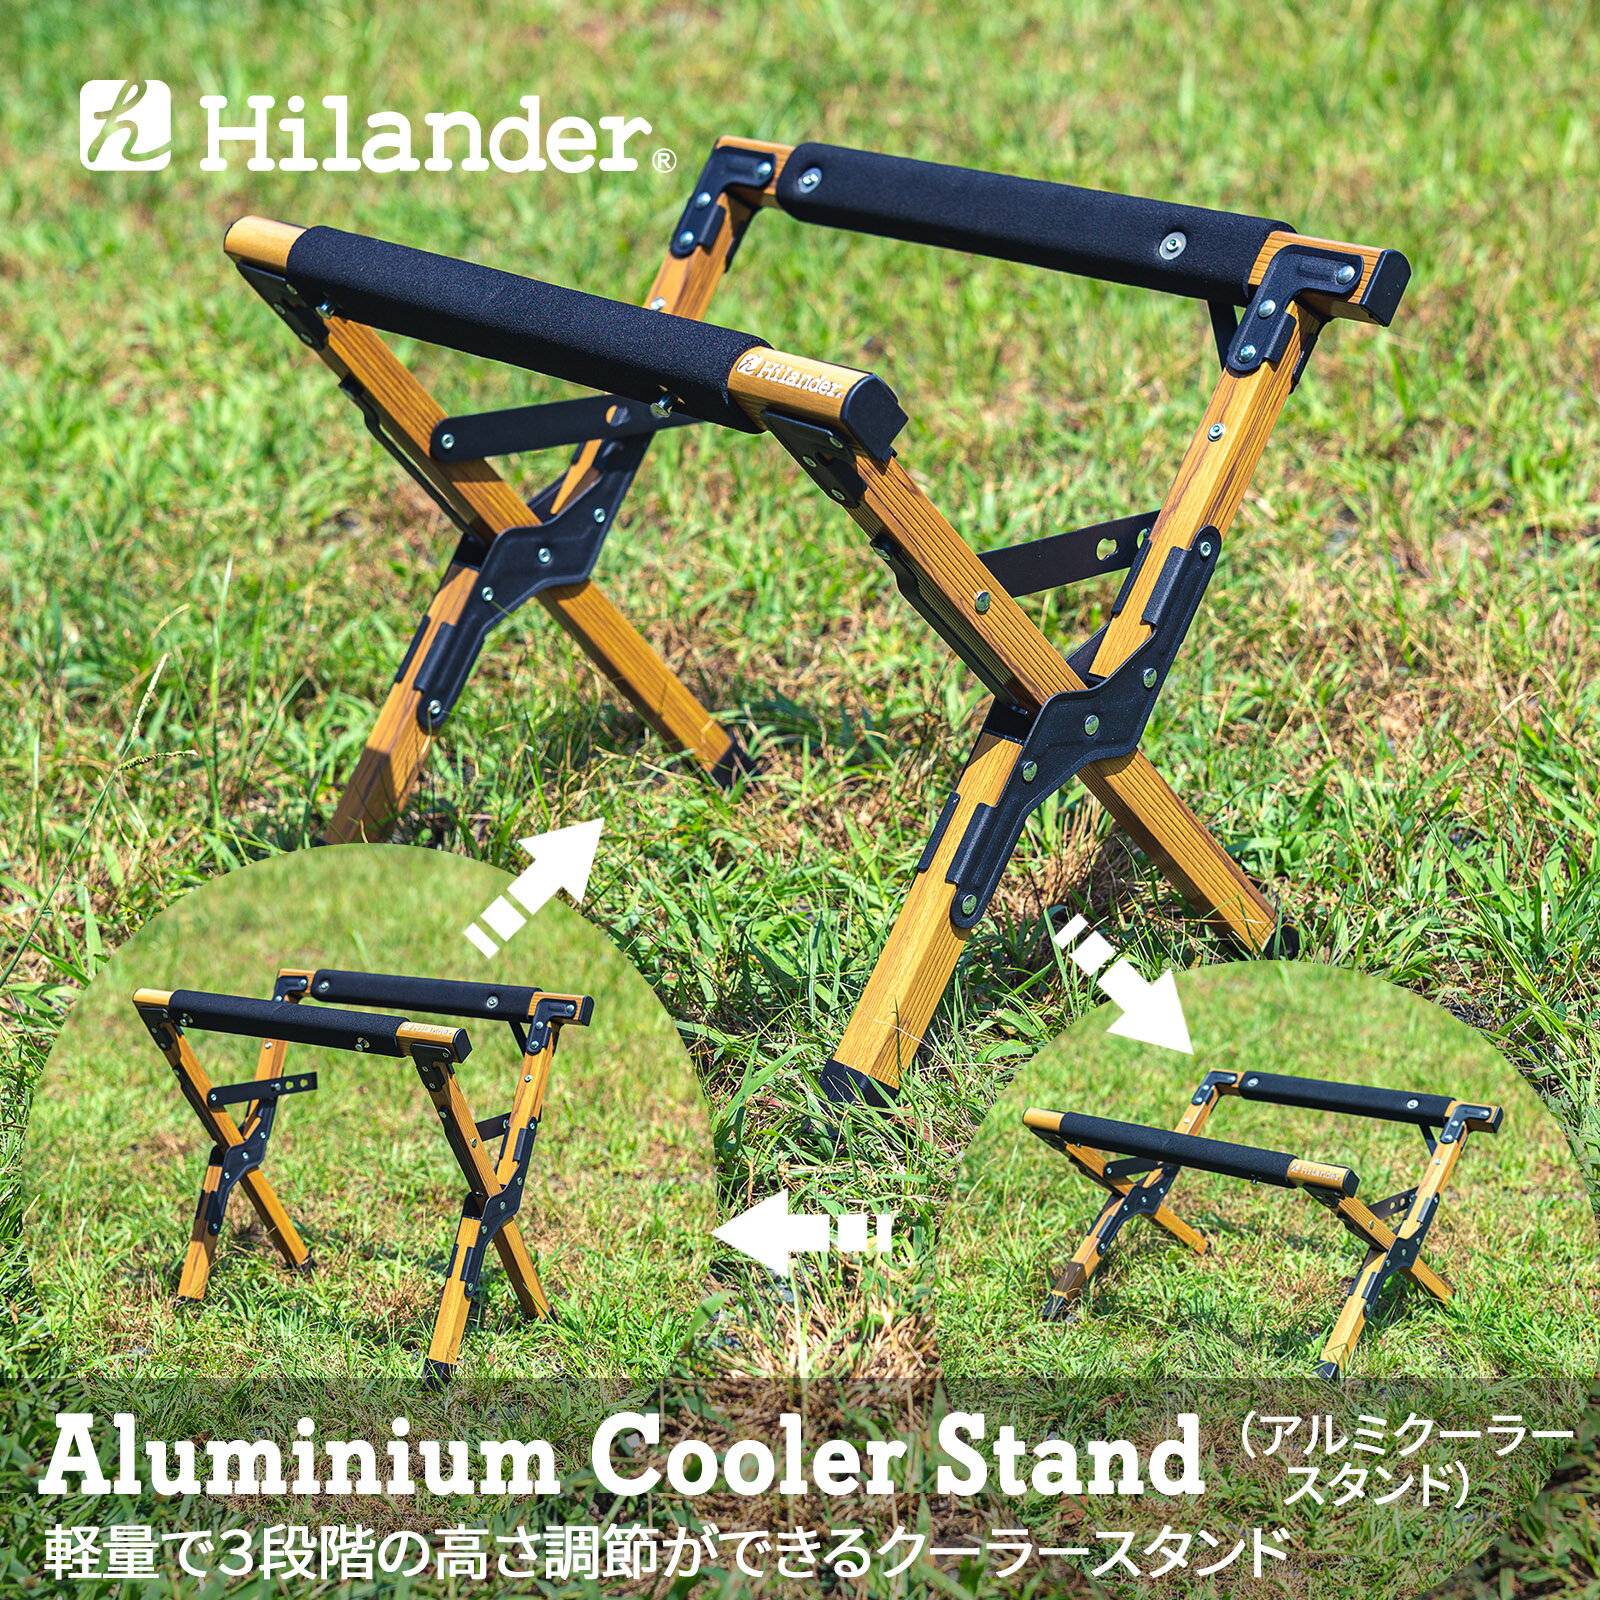 Hilander(ハイランダー) アルミクーラースタンド 【1年保証】 ナチュラル HCA0272